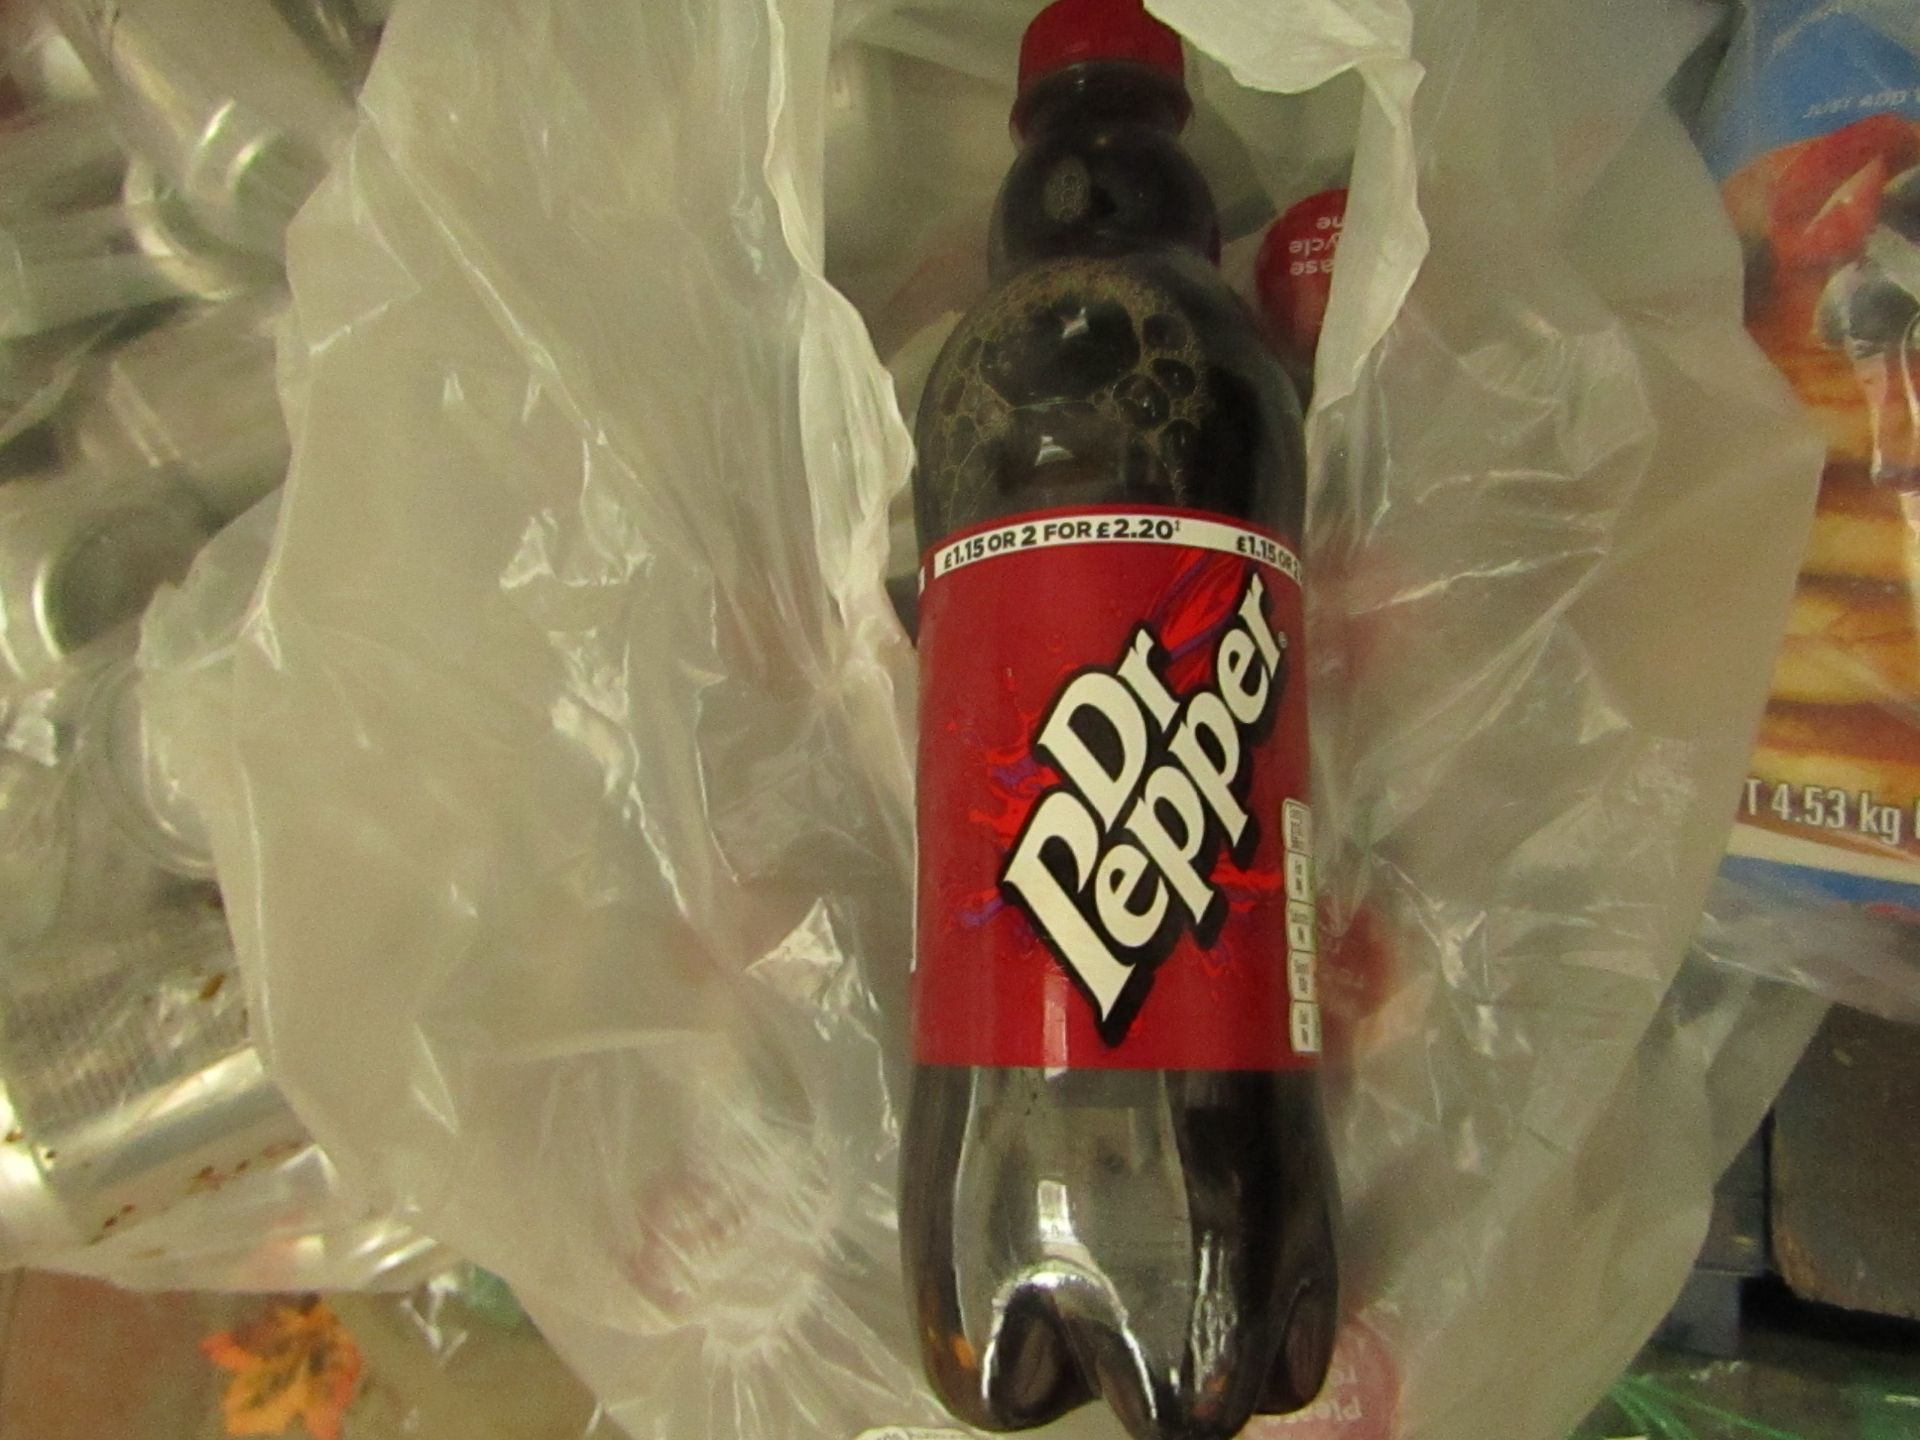 10x Dr Pepper - Original 500ml Bottles - Unused & Packaged.